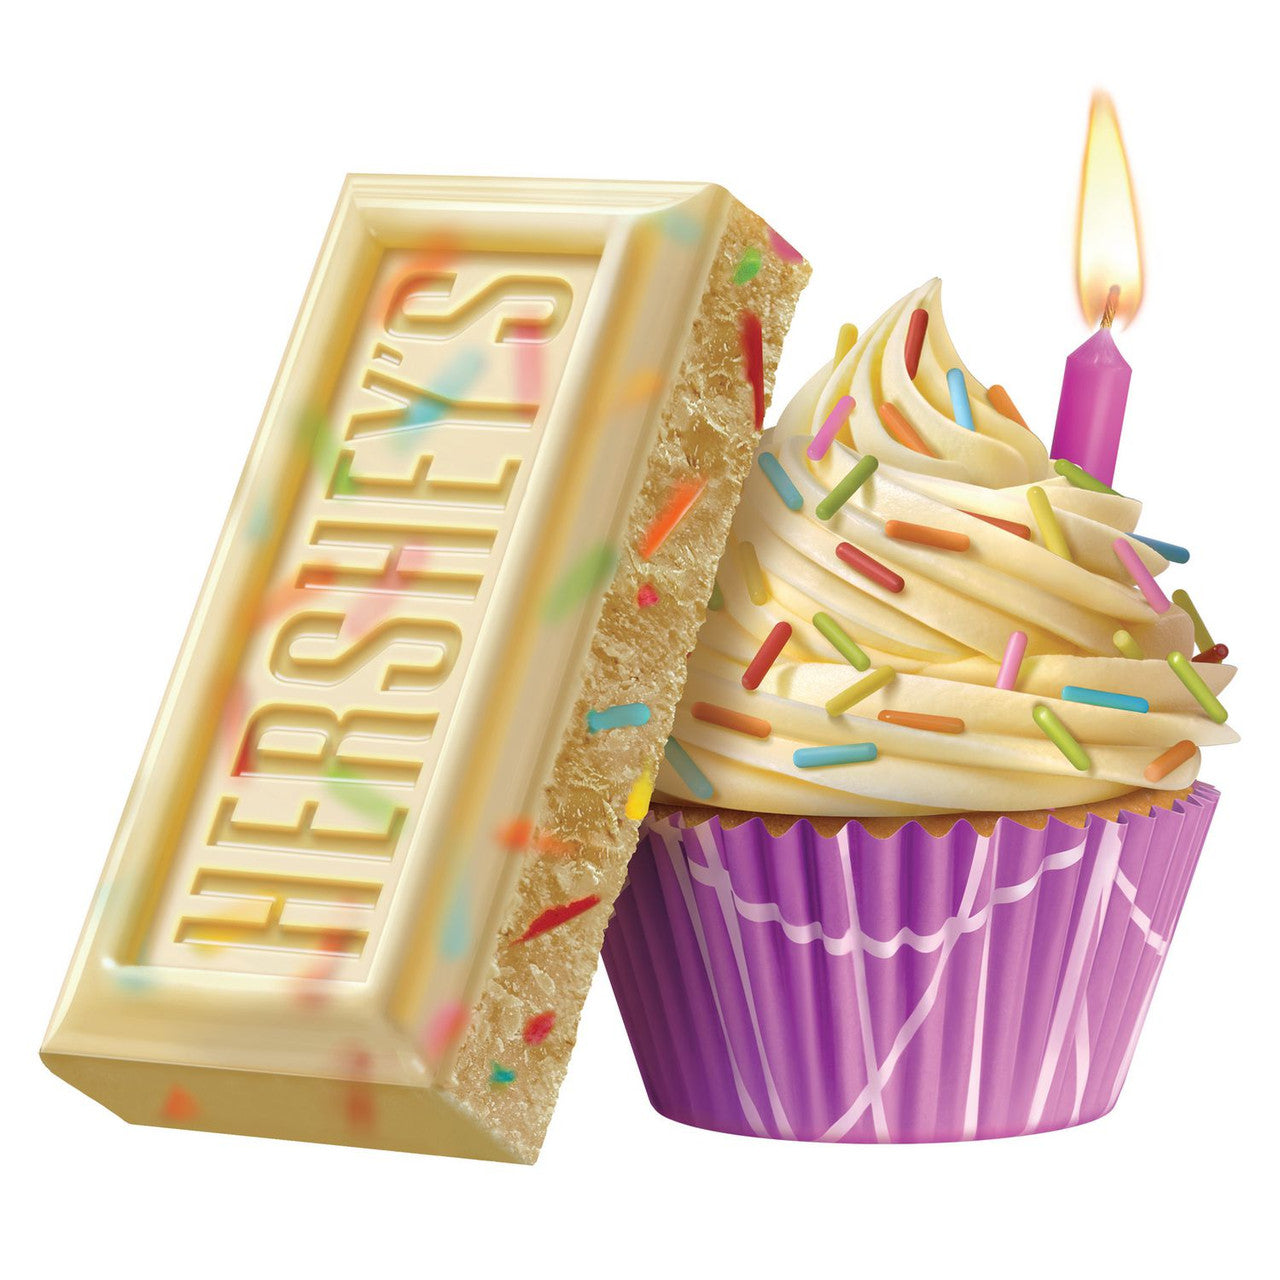 Hershey's Birthday Cake Chocolate Bar, 95g/3.4 oz., {Imported from Canada}